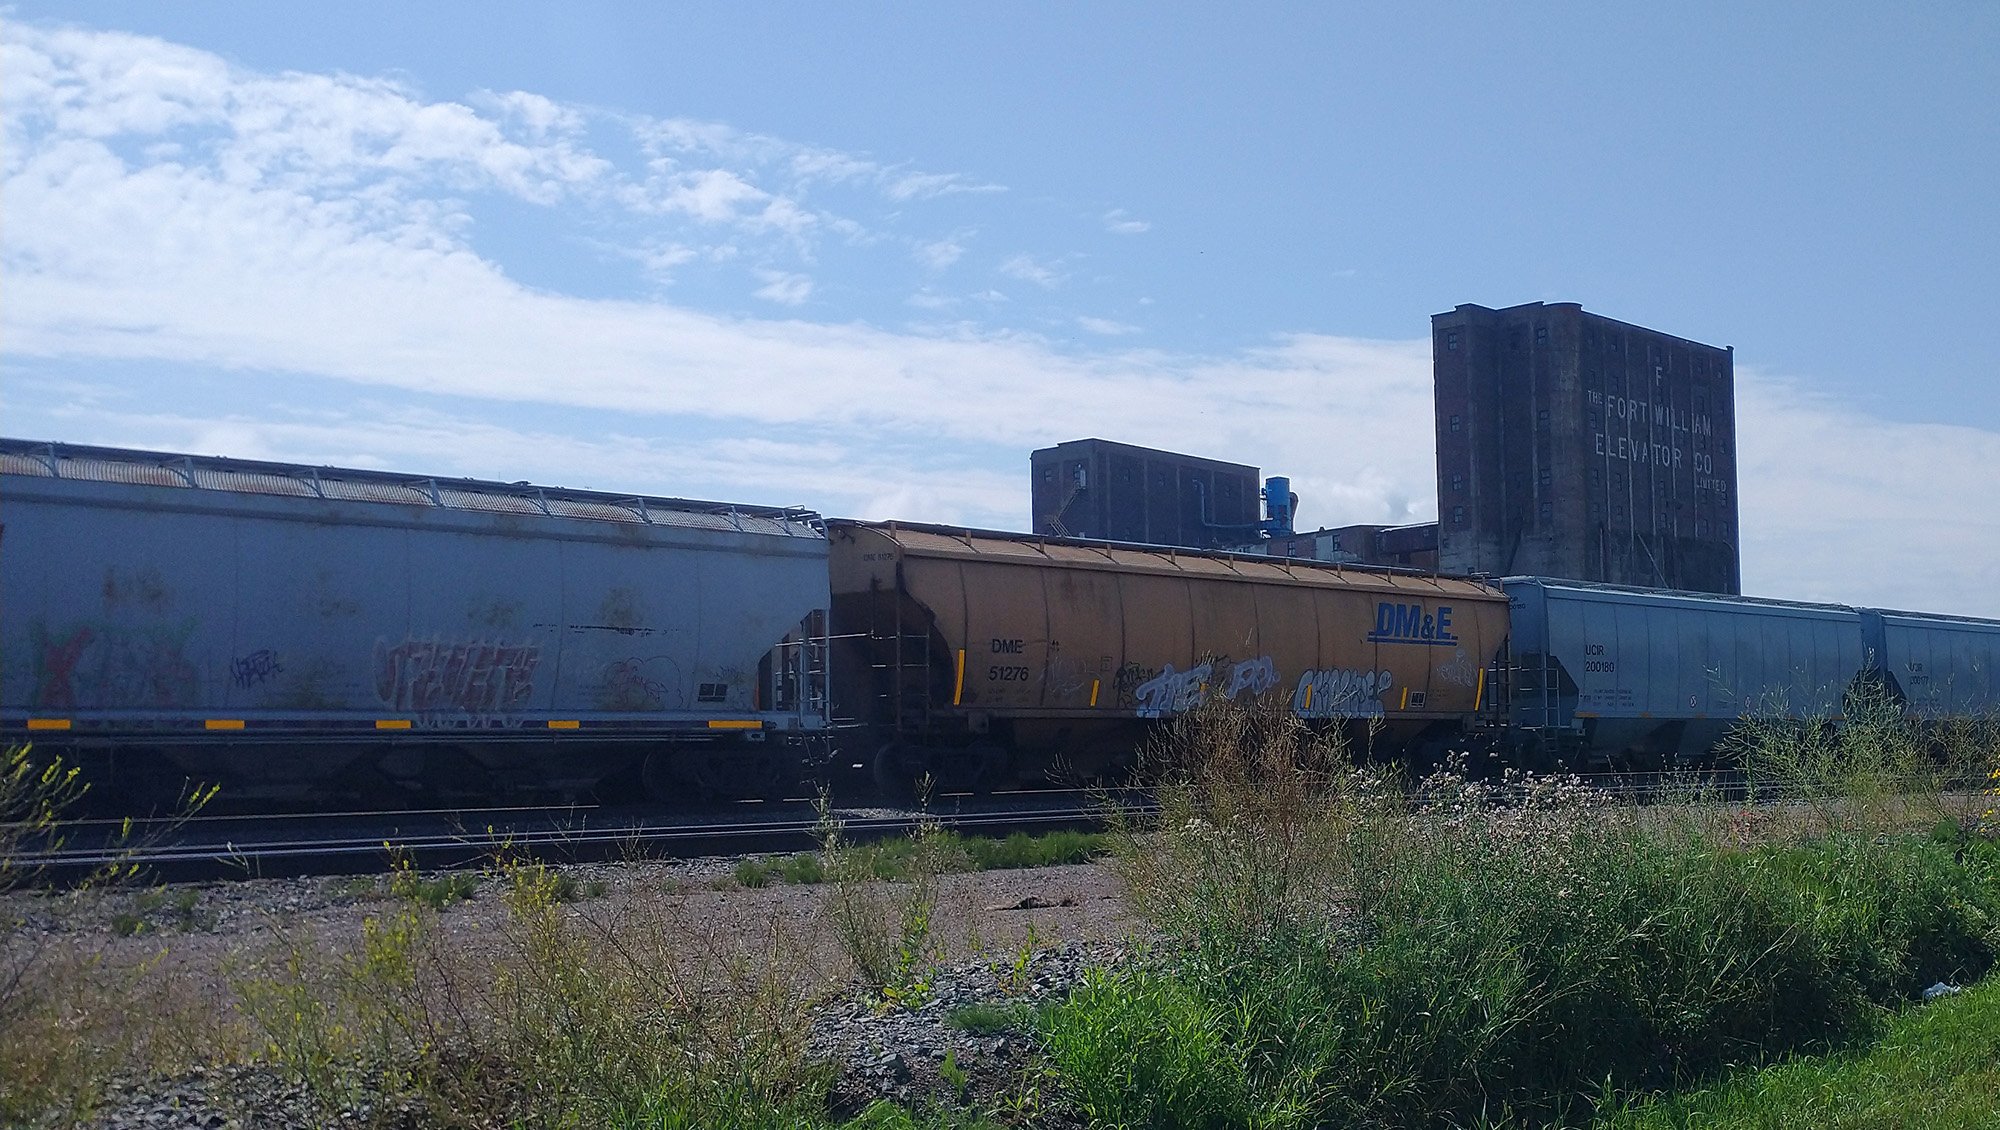 Thunder Bay is a big railroad hub/city.